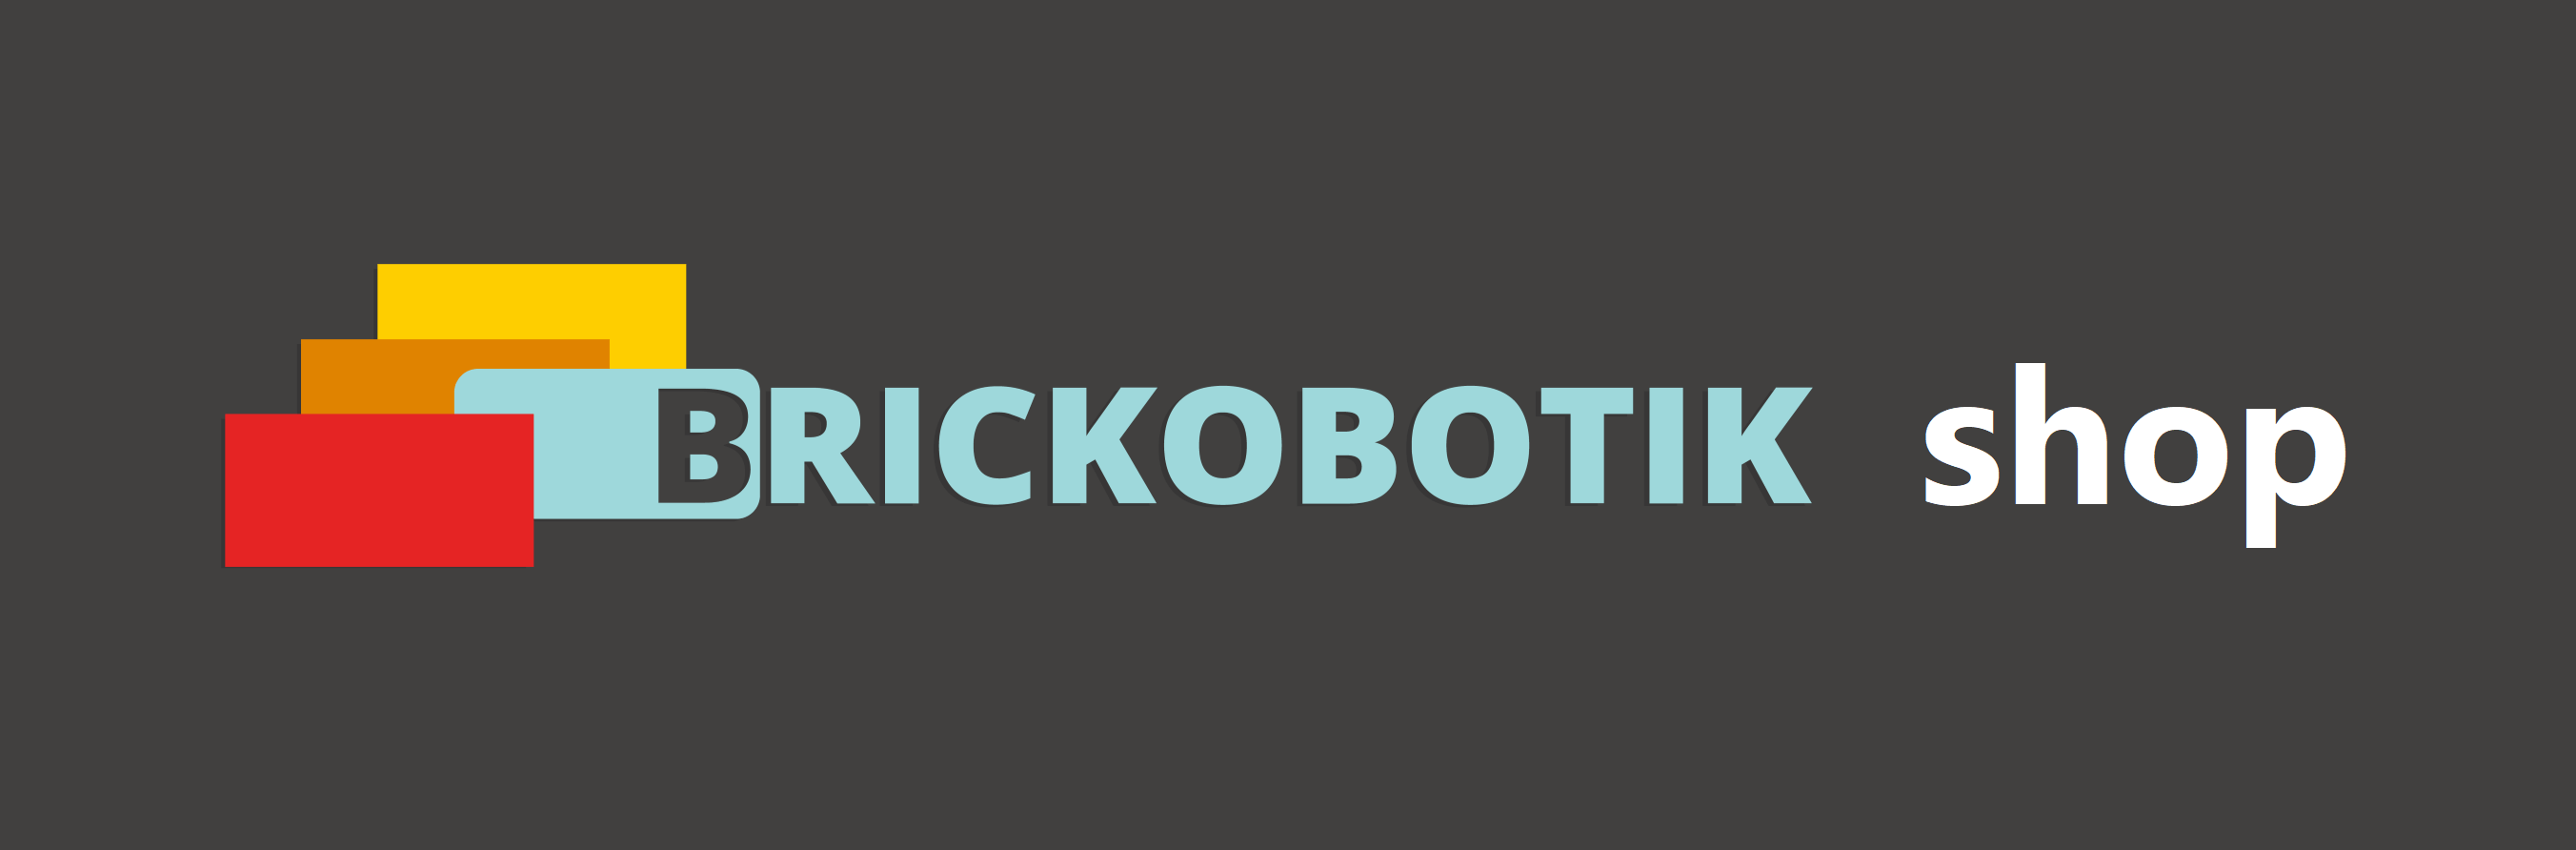 Das brickobotik-Logo